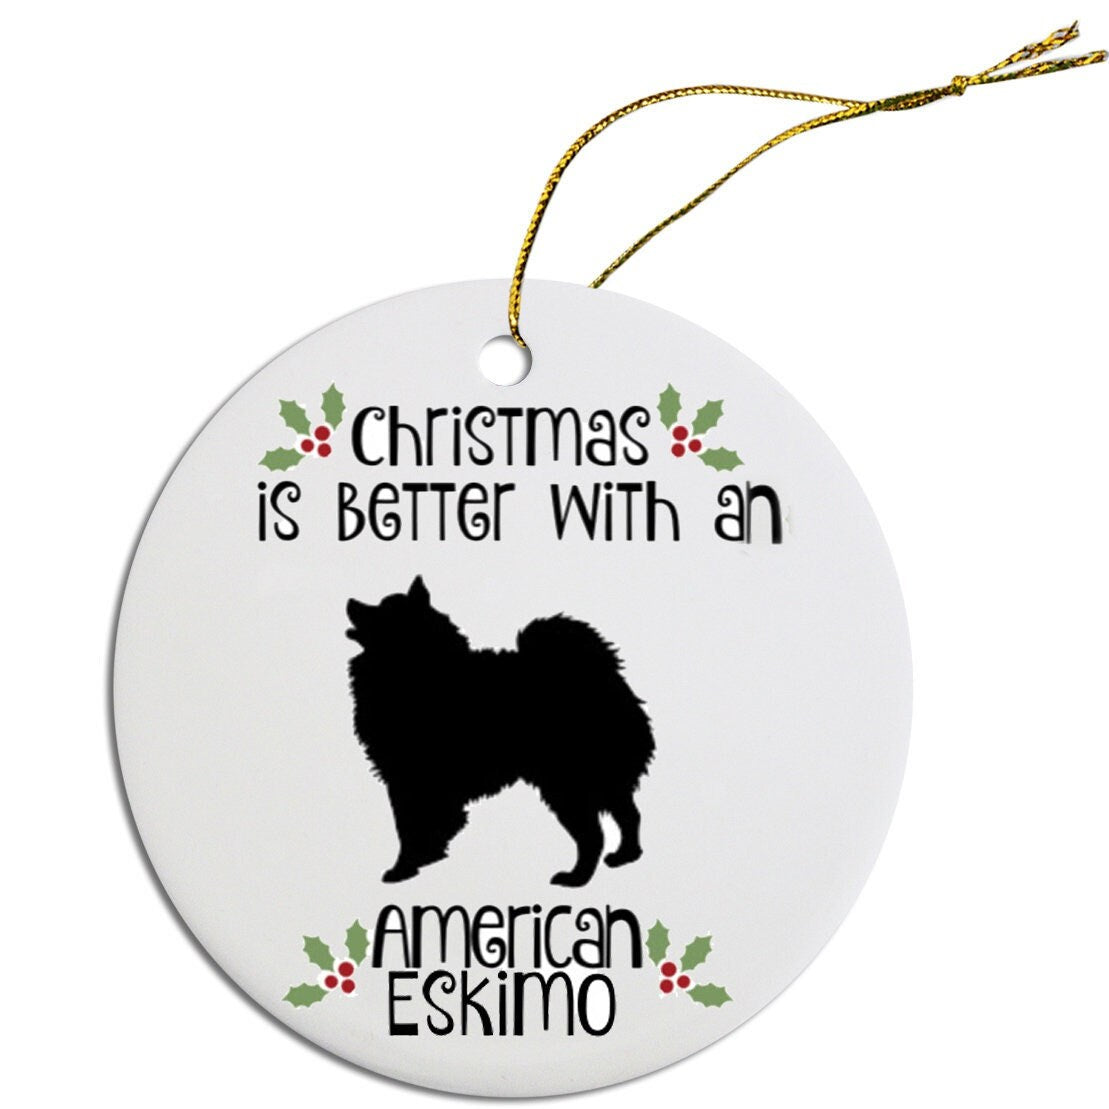 Dog Breed Specific Round Christmas Ornament, "American Eskimo"